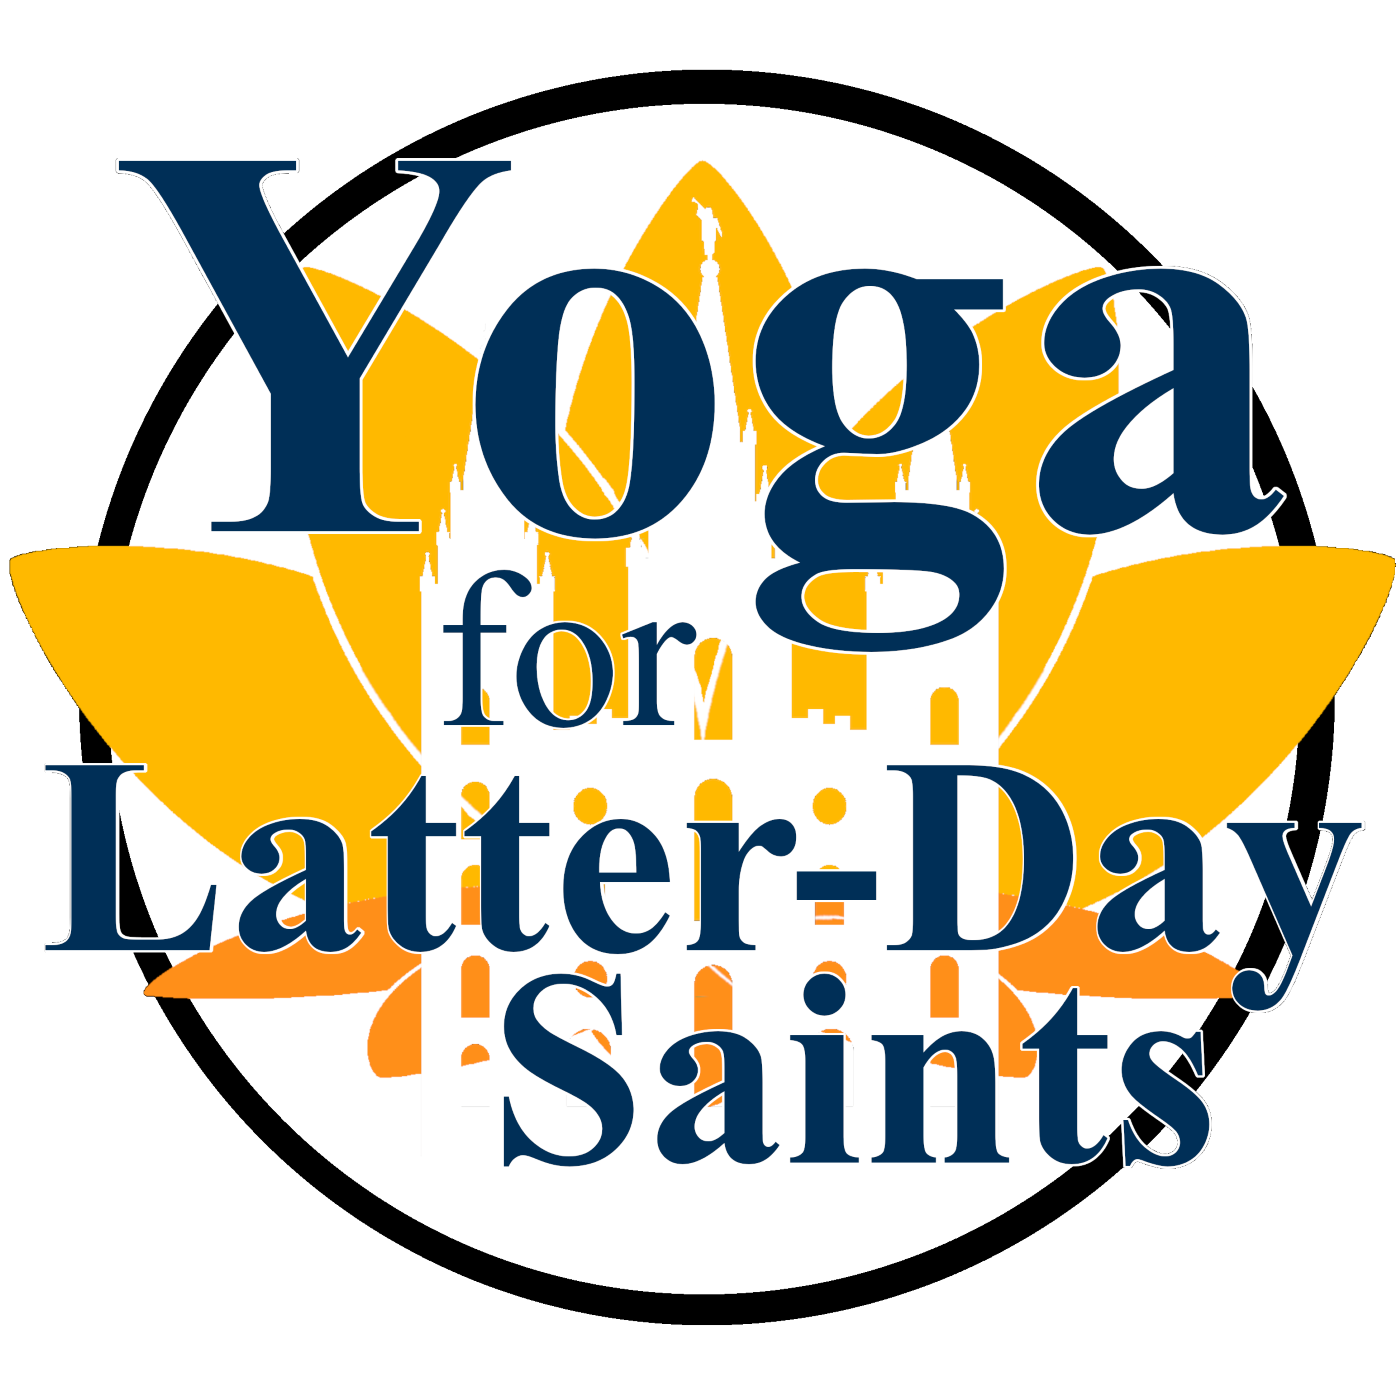 Yoga for Latter-Day Saints